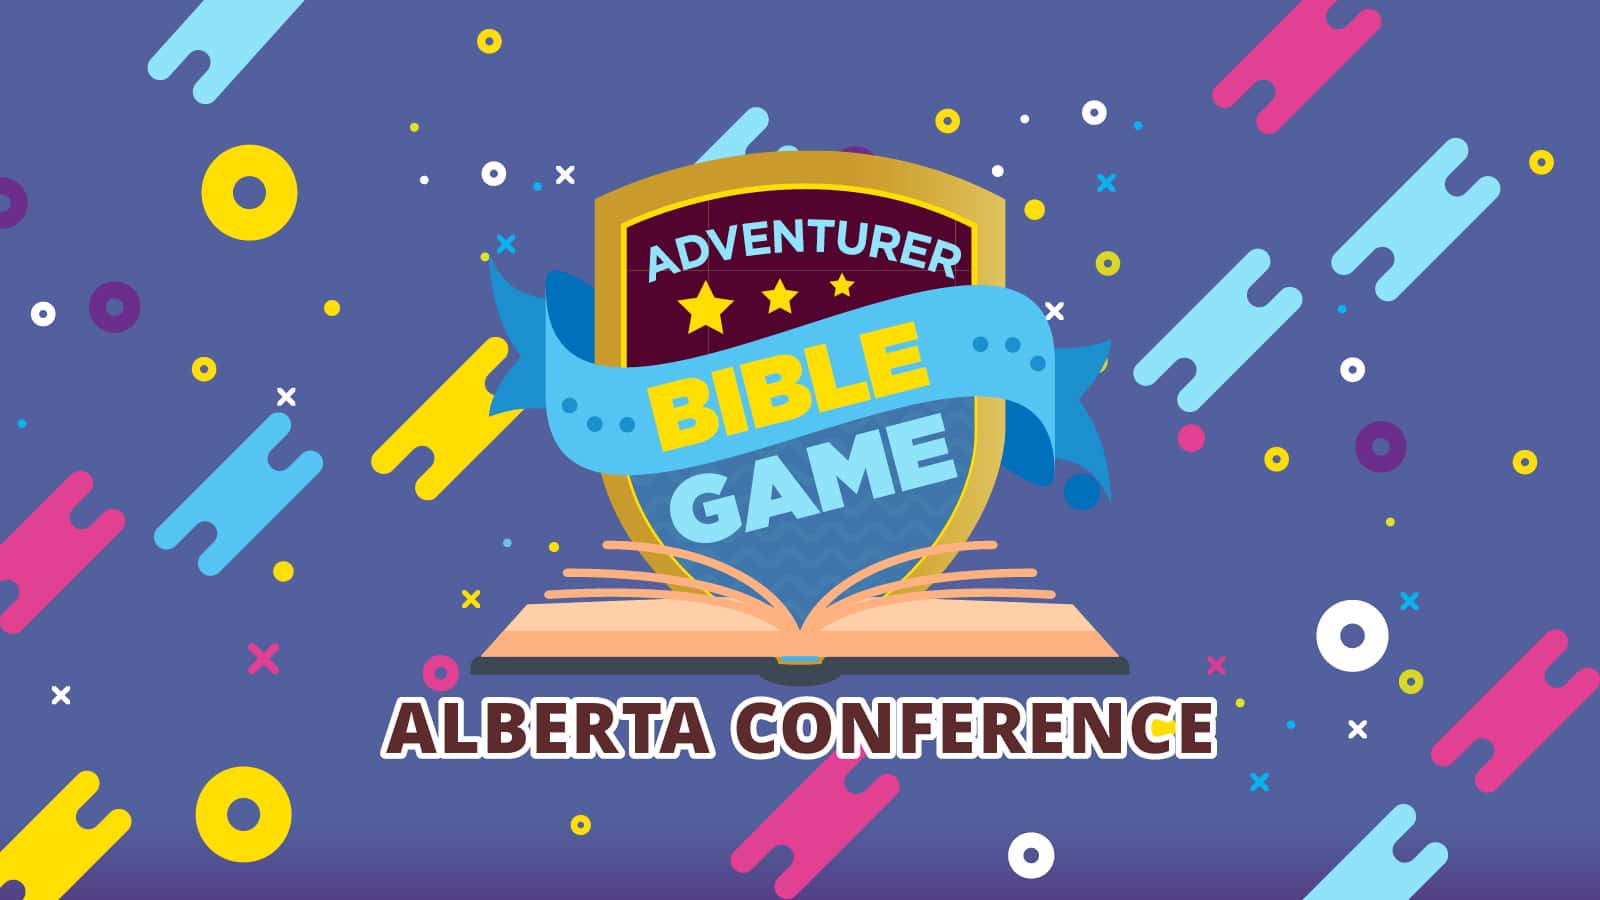 Adventurer Bible Game - Alberta Conference